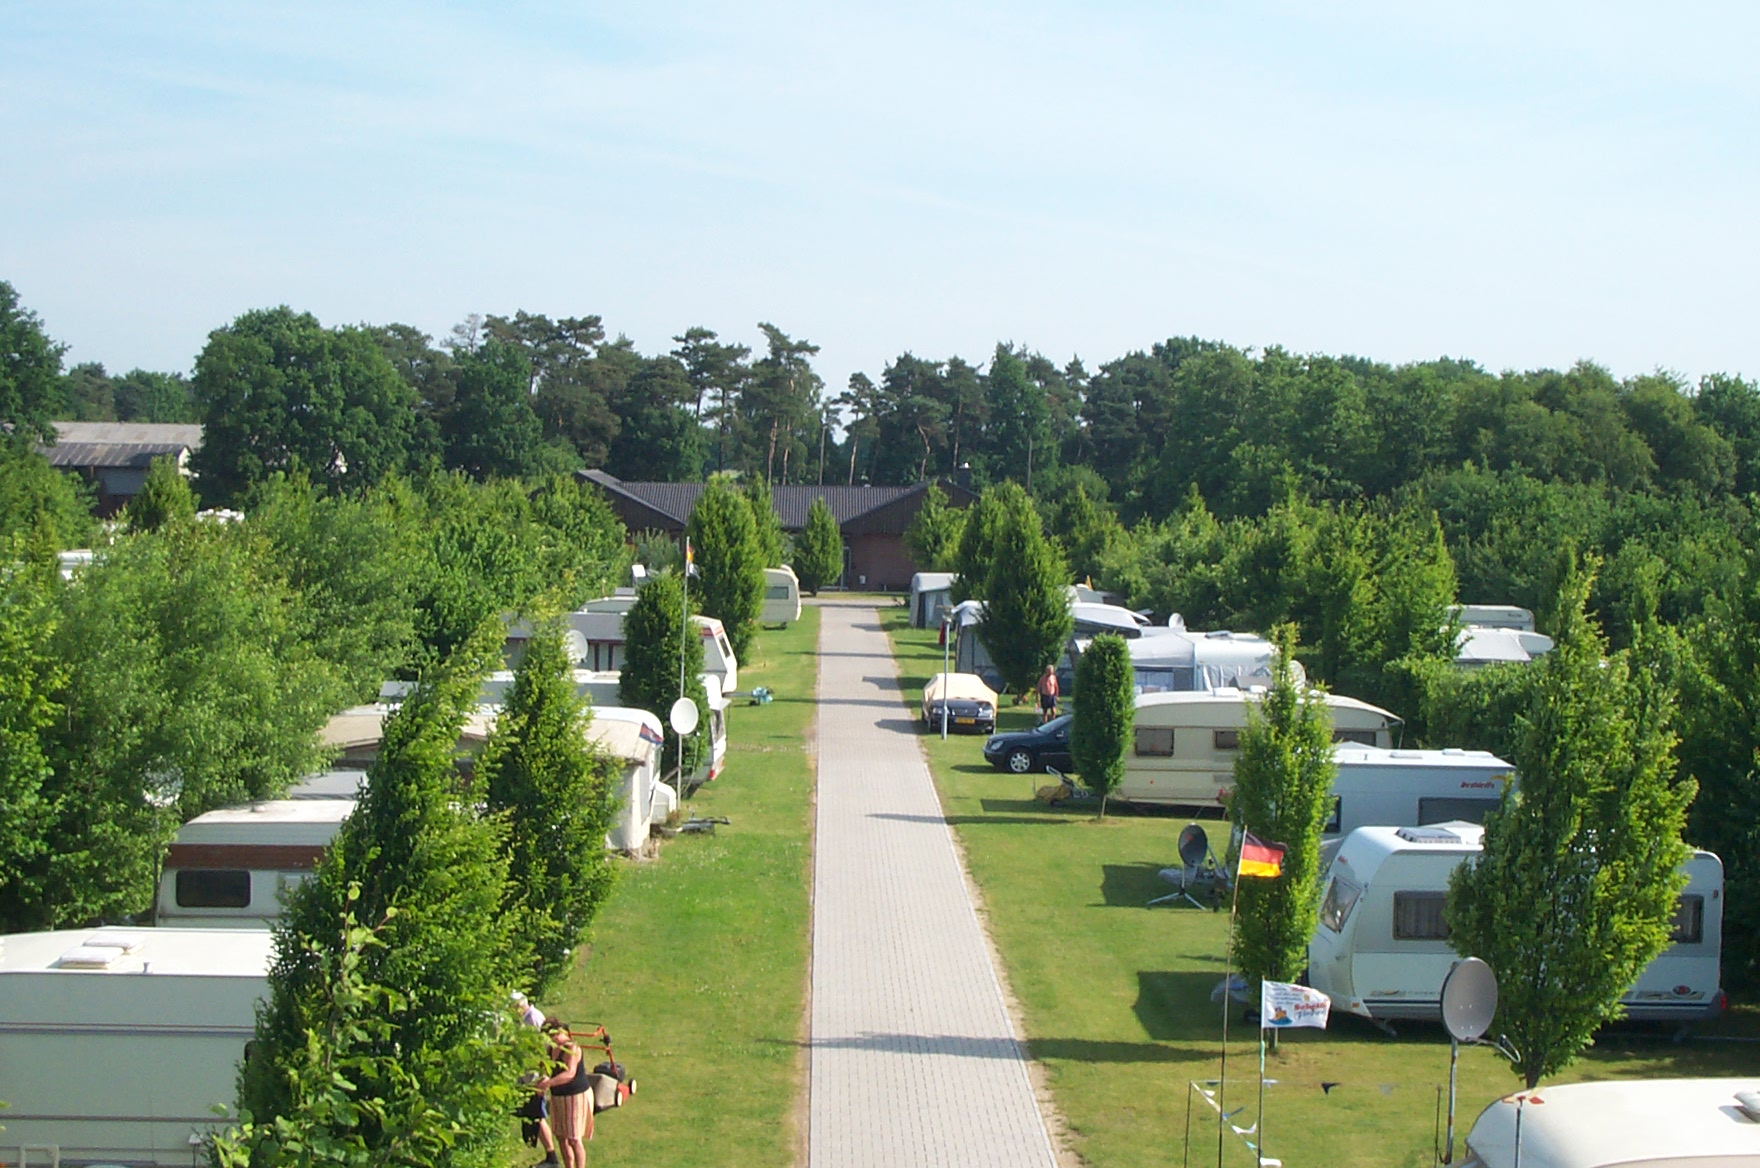 Campingplatz Hümmlinger Land